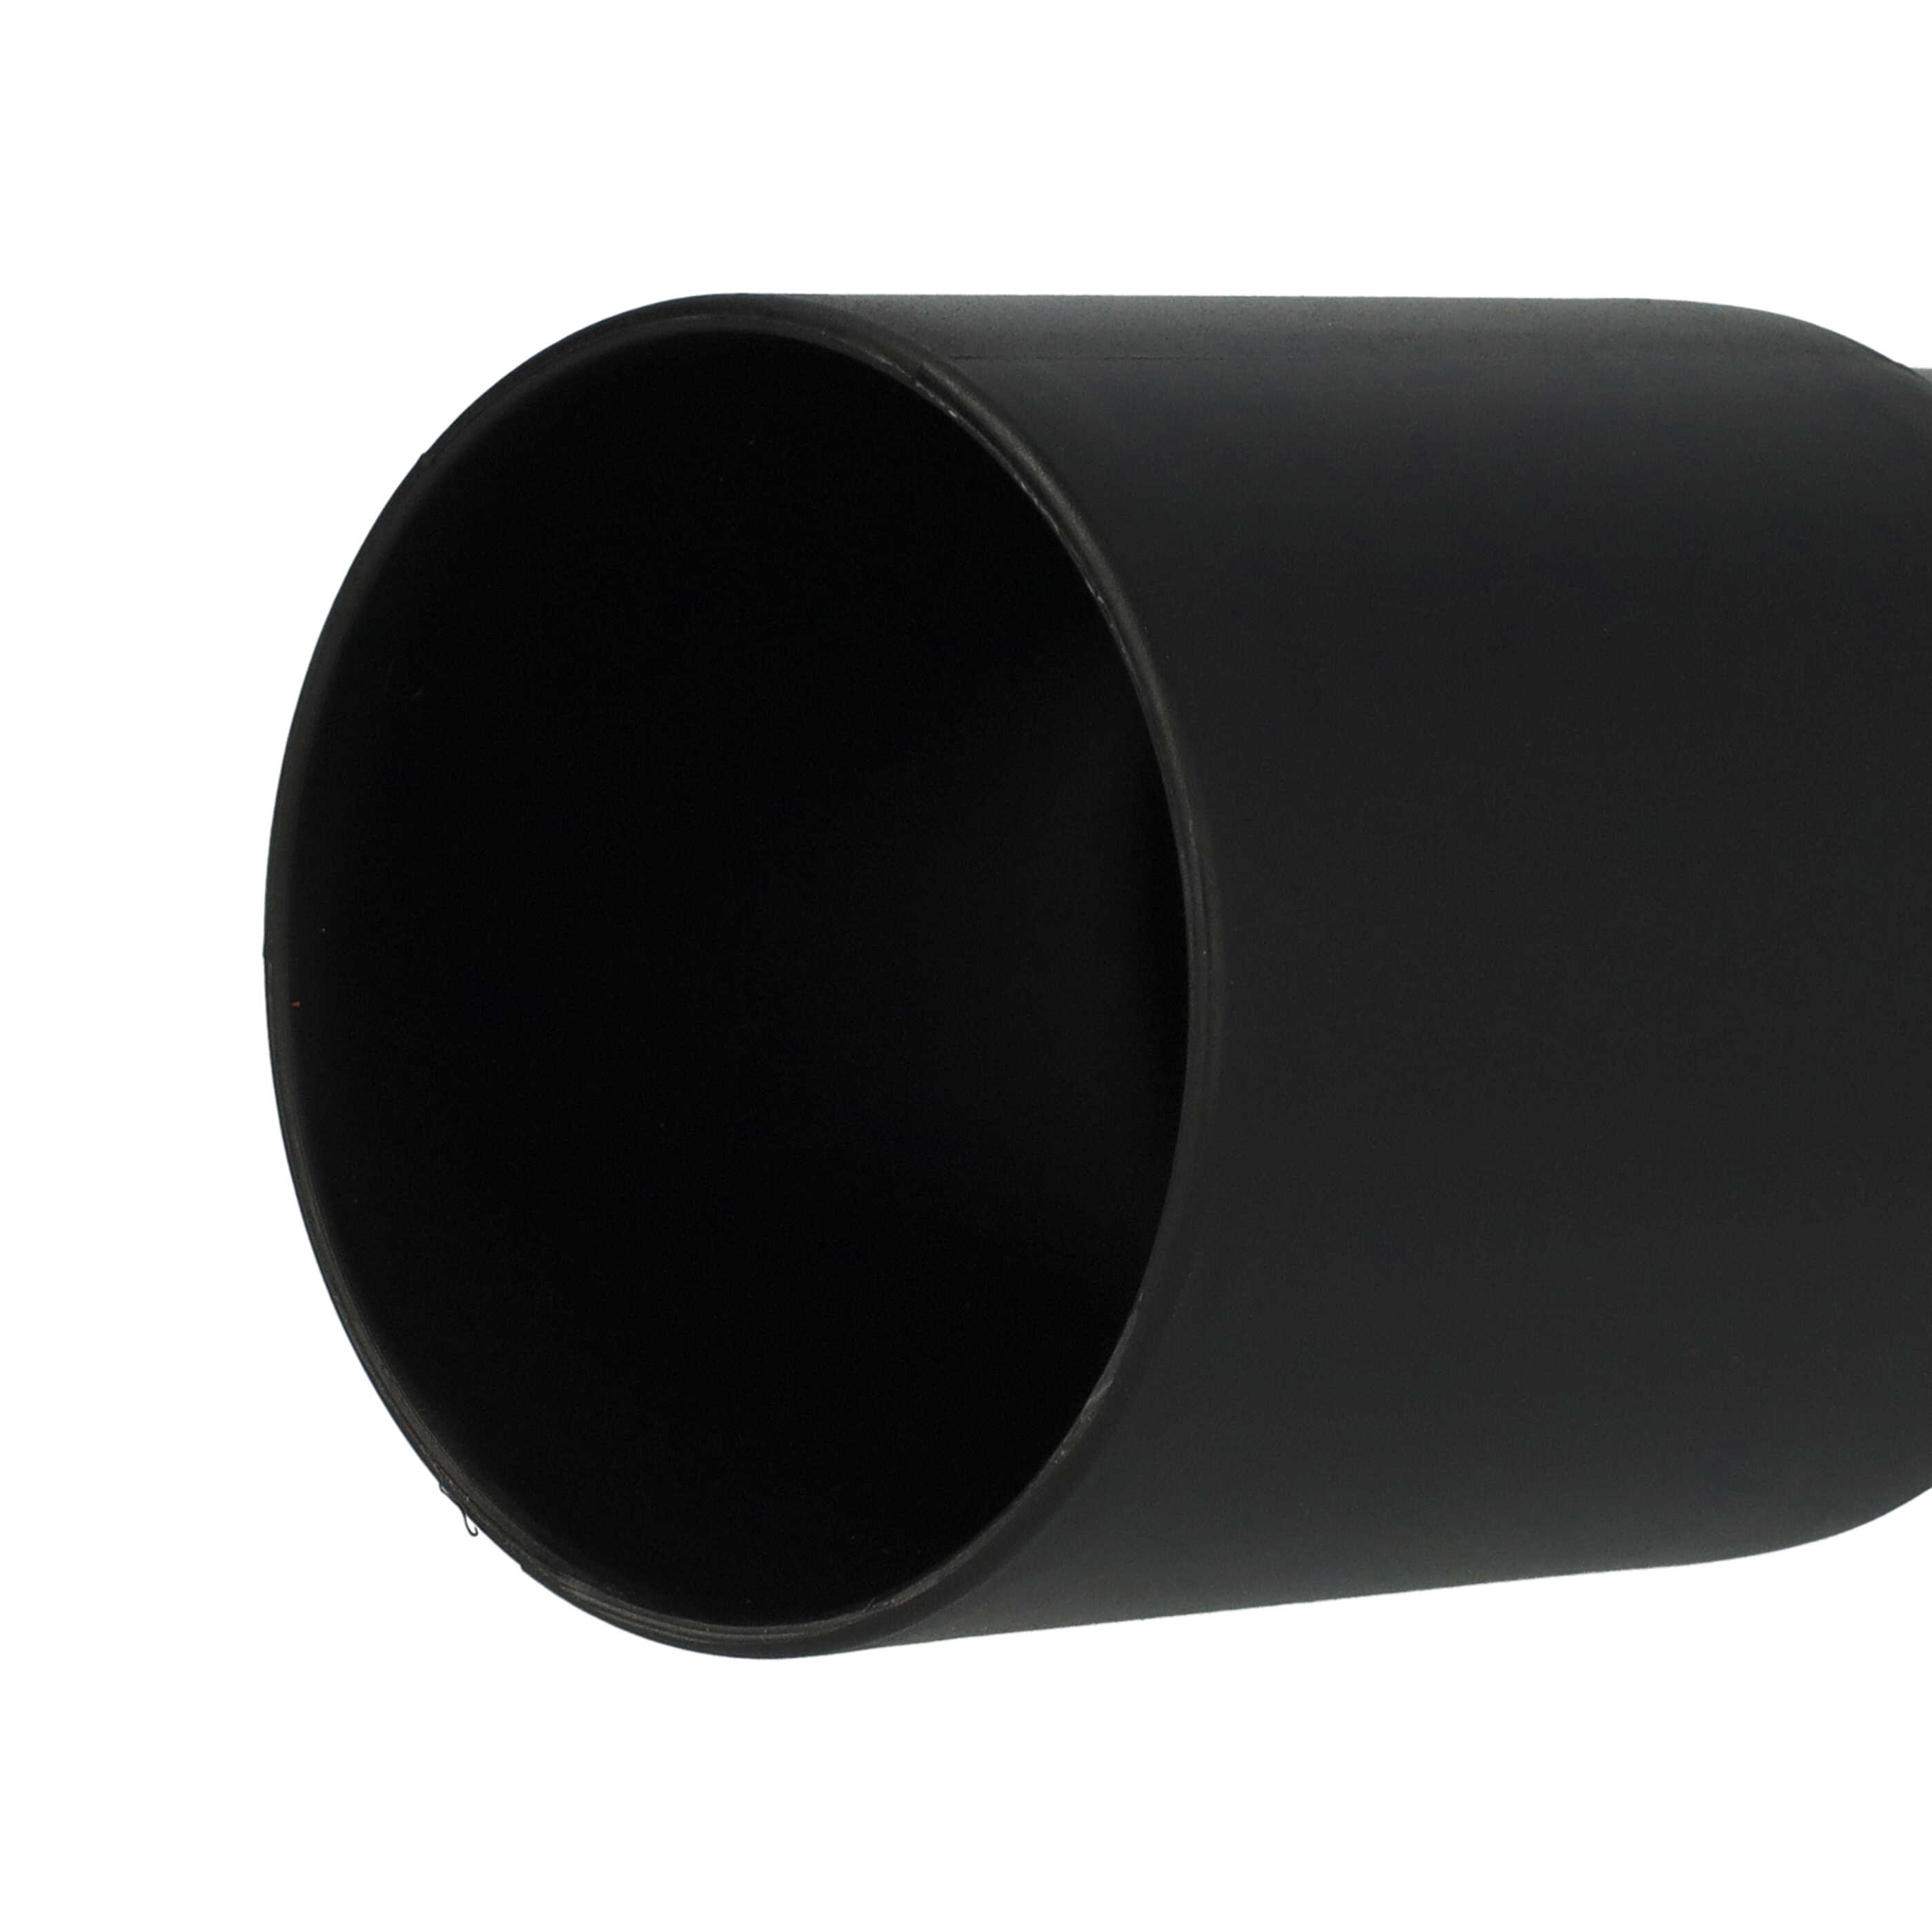 Adattatore per tubo flessibile per 4 Kärcher aspiratori - sistema a clic